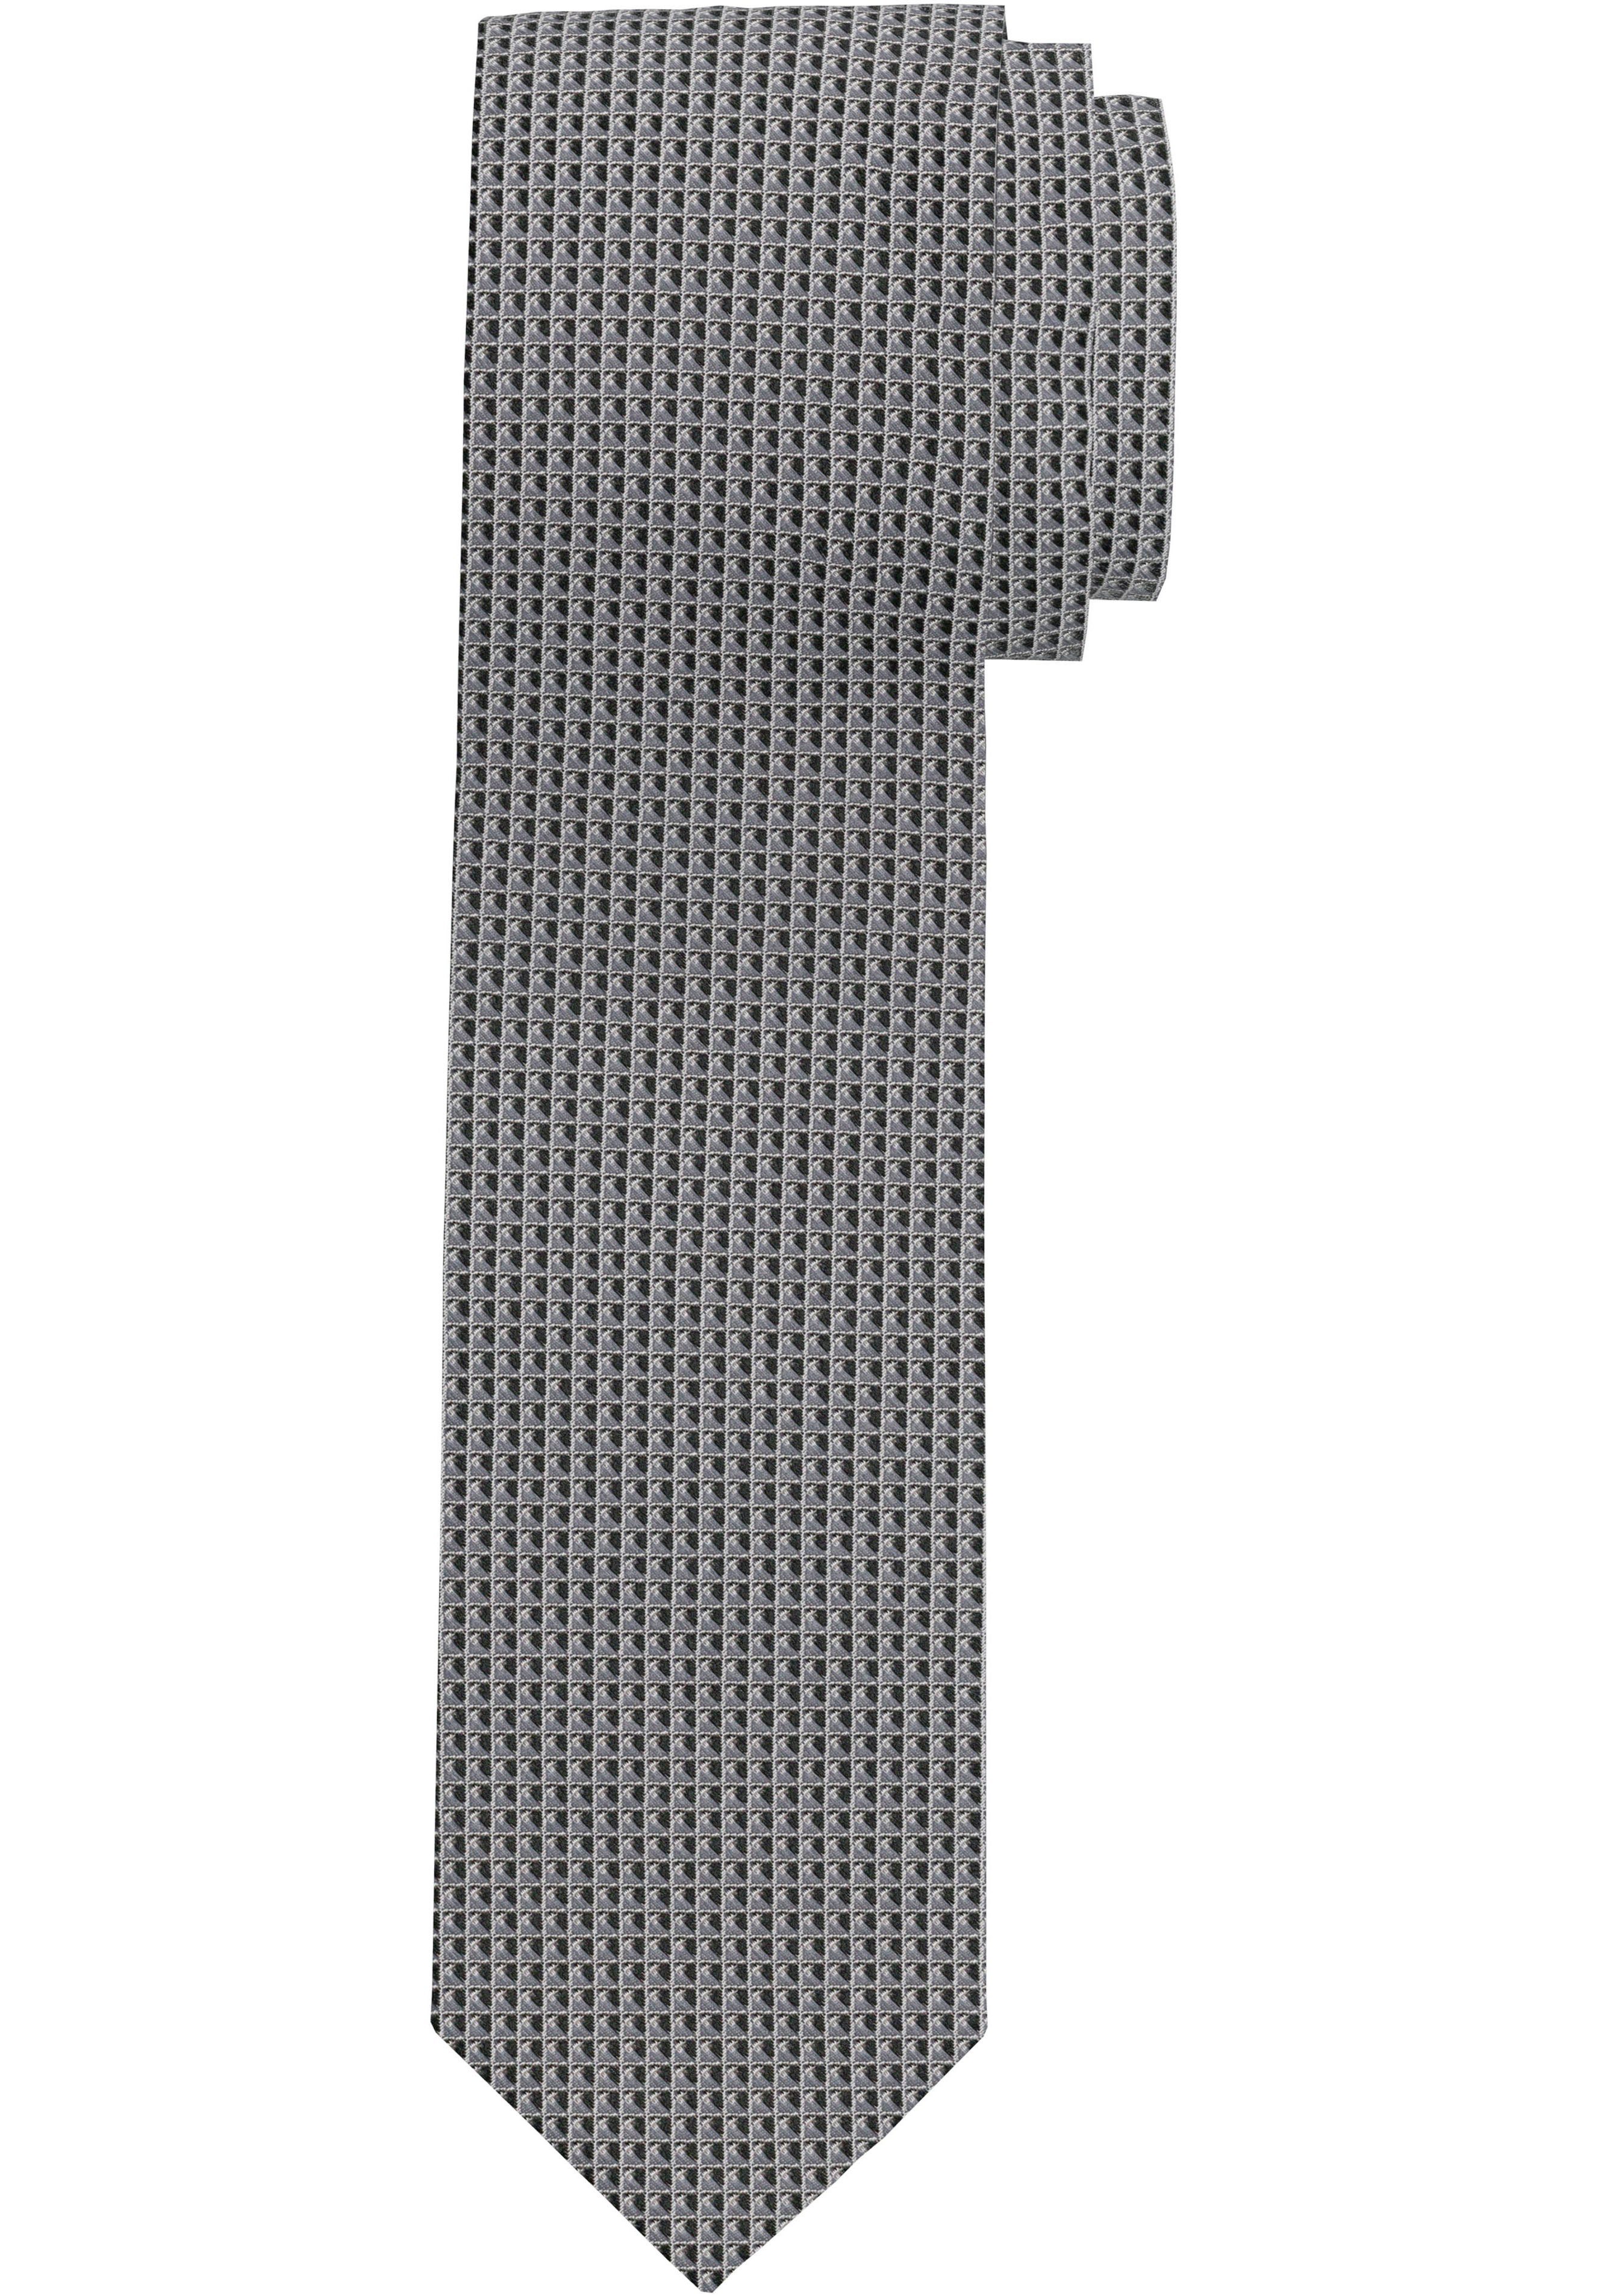 Krawatte anthrazit Krawatte Strukturierte OLYMP